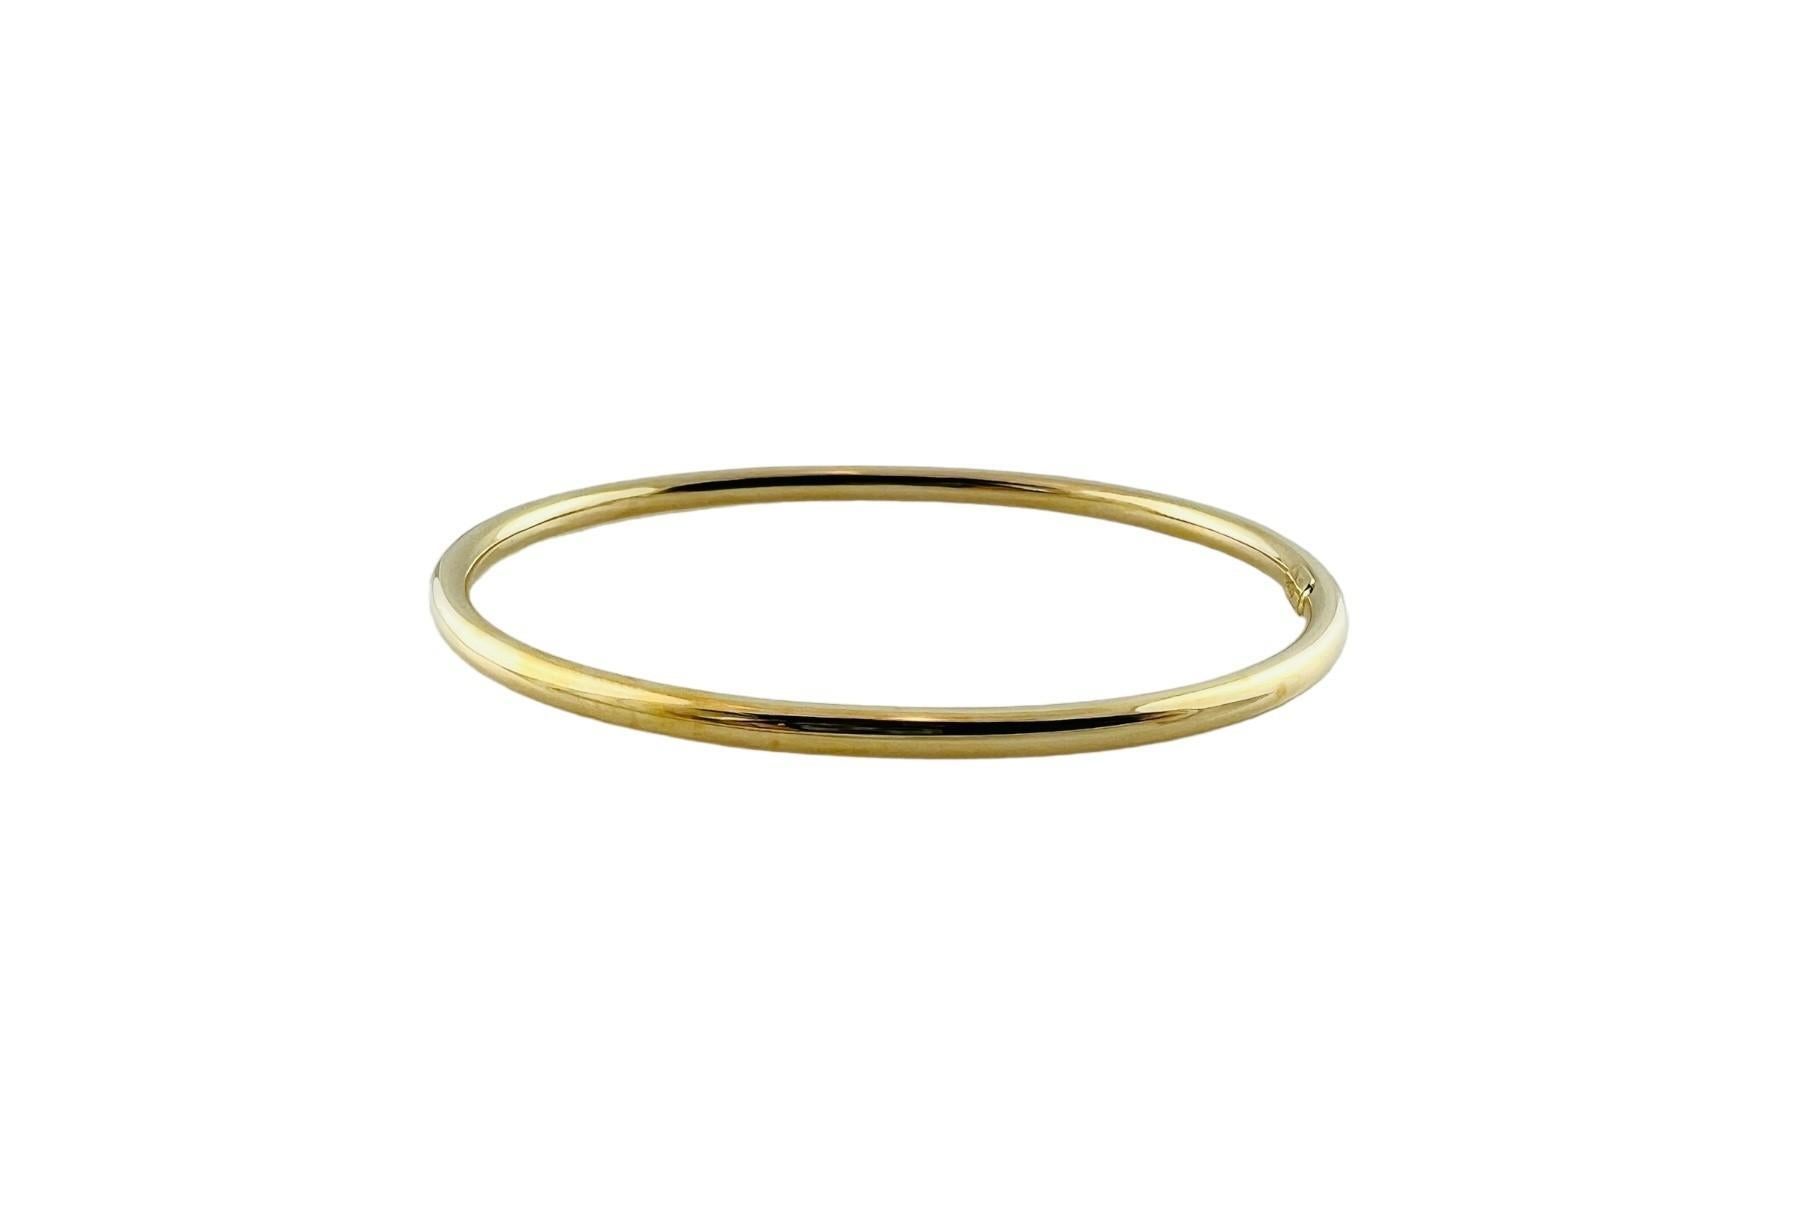 Tiffany & Co. 18K Yellow Gold Oval Bangle Bracelet #16746 4